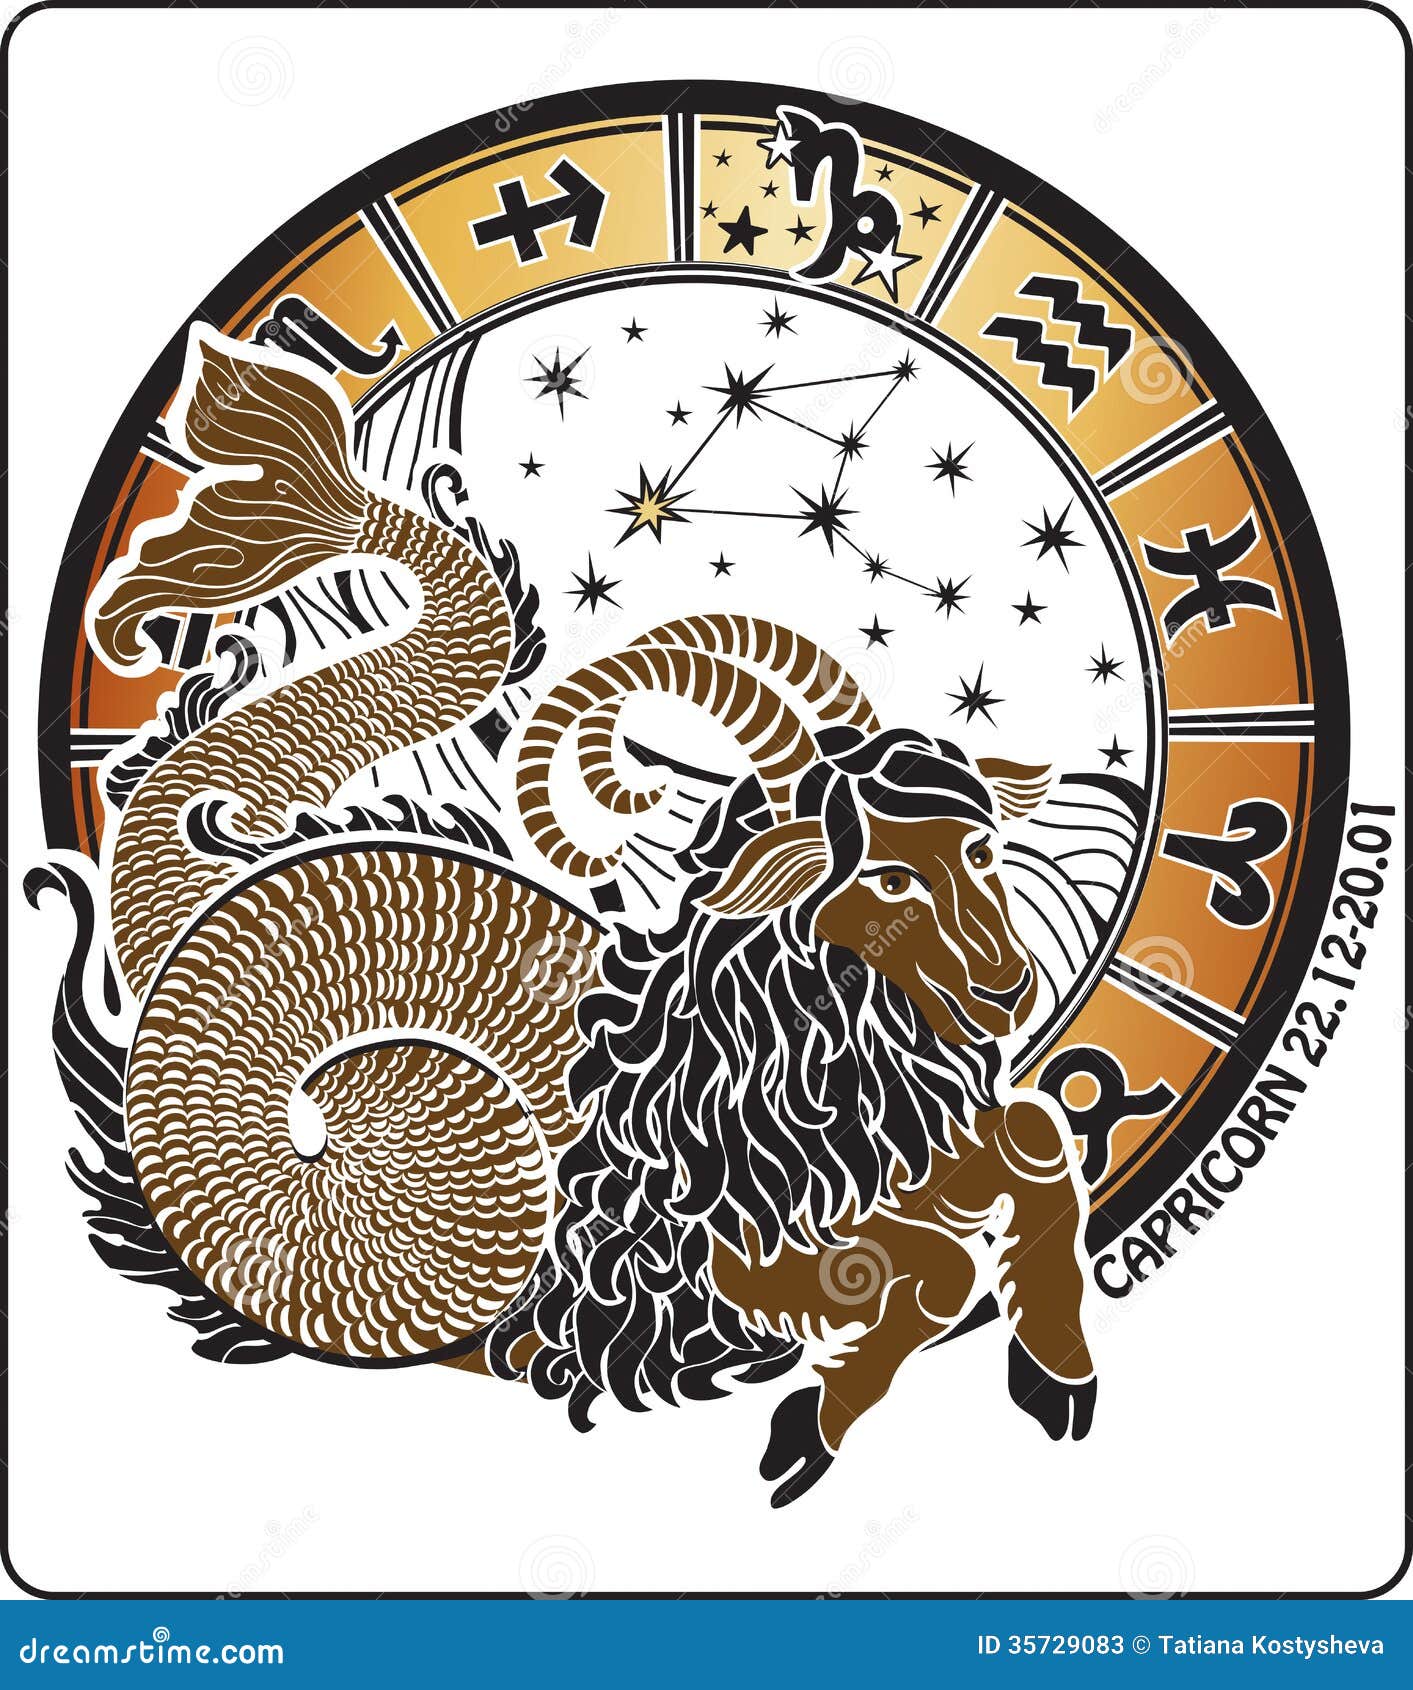 capricorn and the zodiac sign.horoscope circle.vec